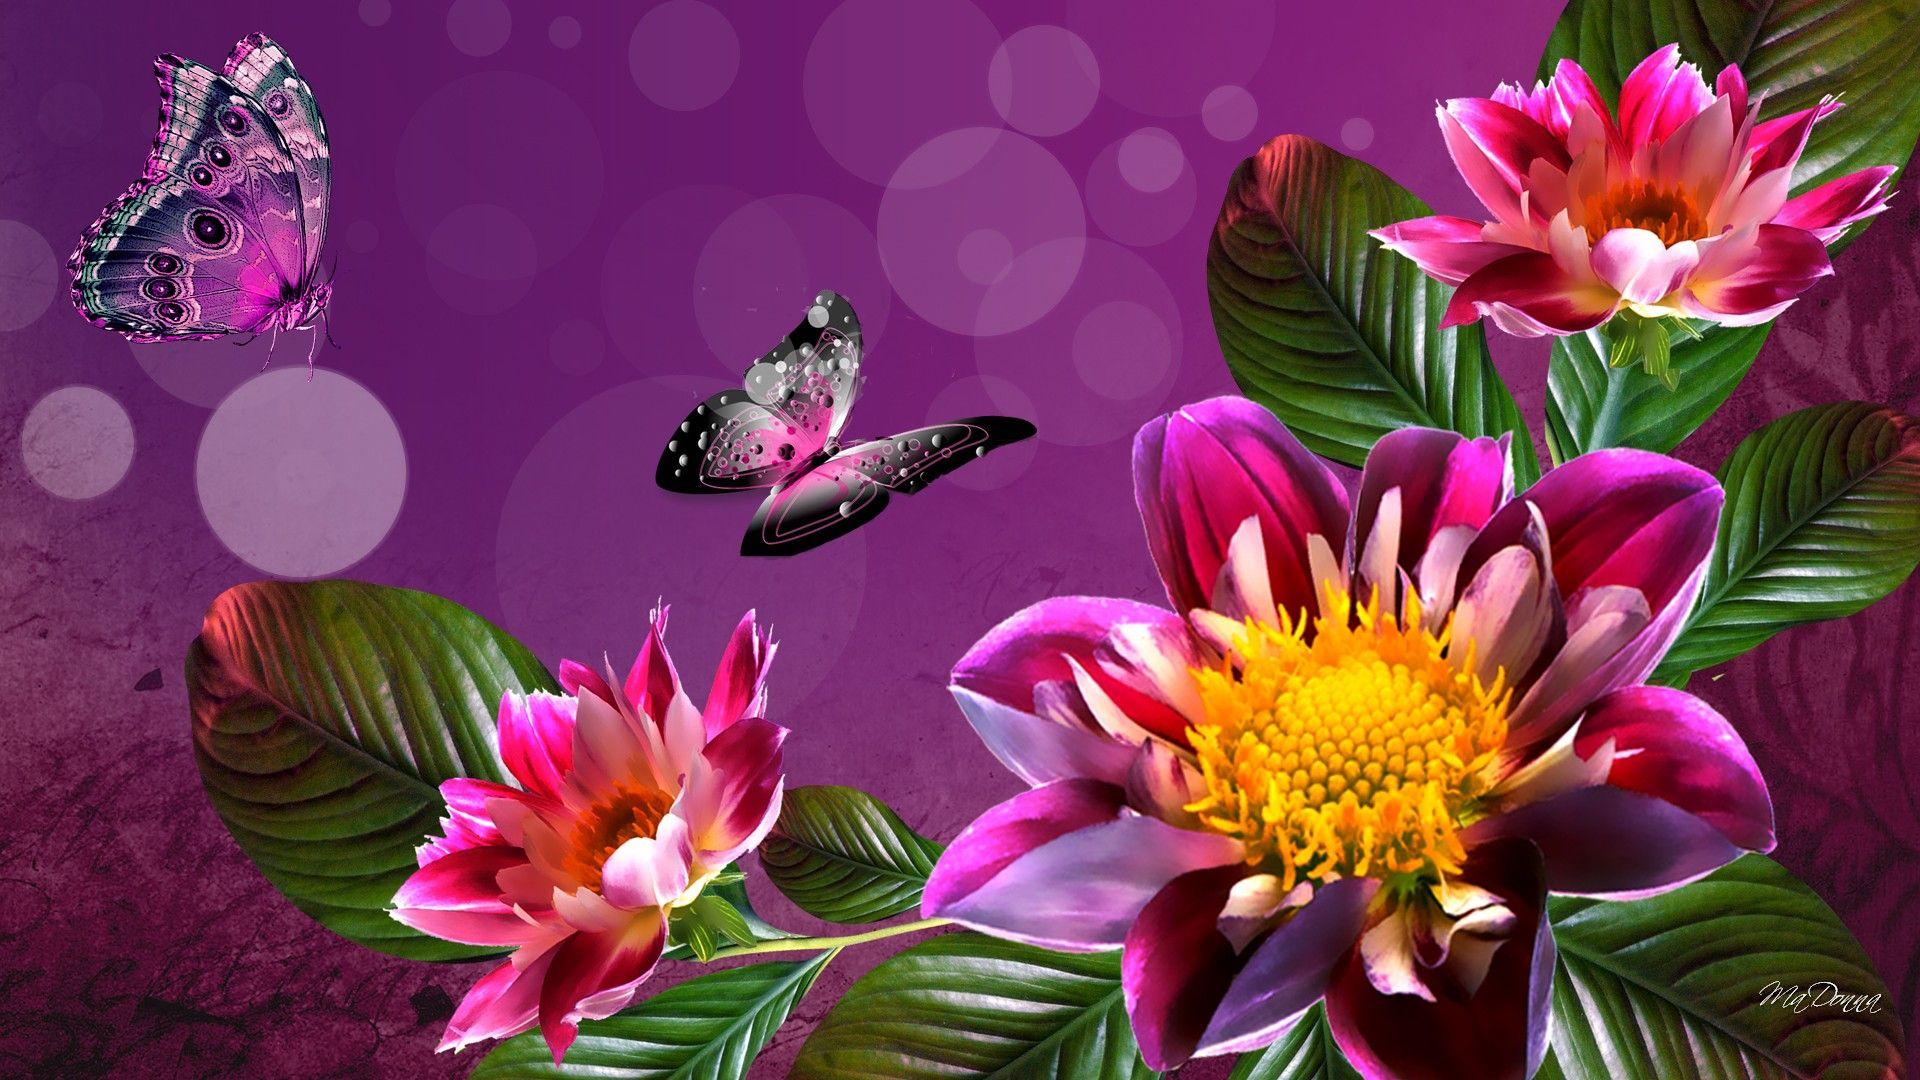 Rose Flowers HD Wallpaper For Desktop High Resolution Of Laptop